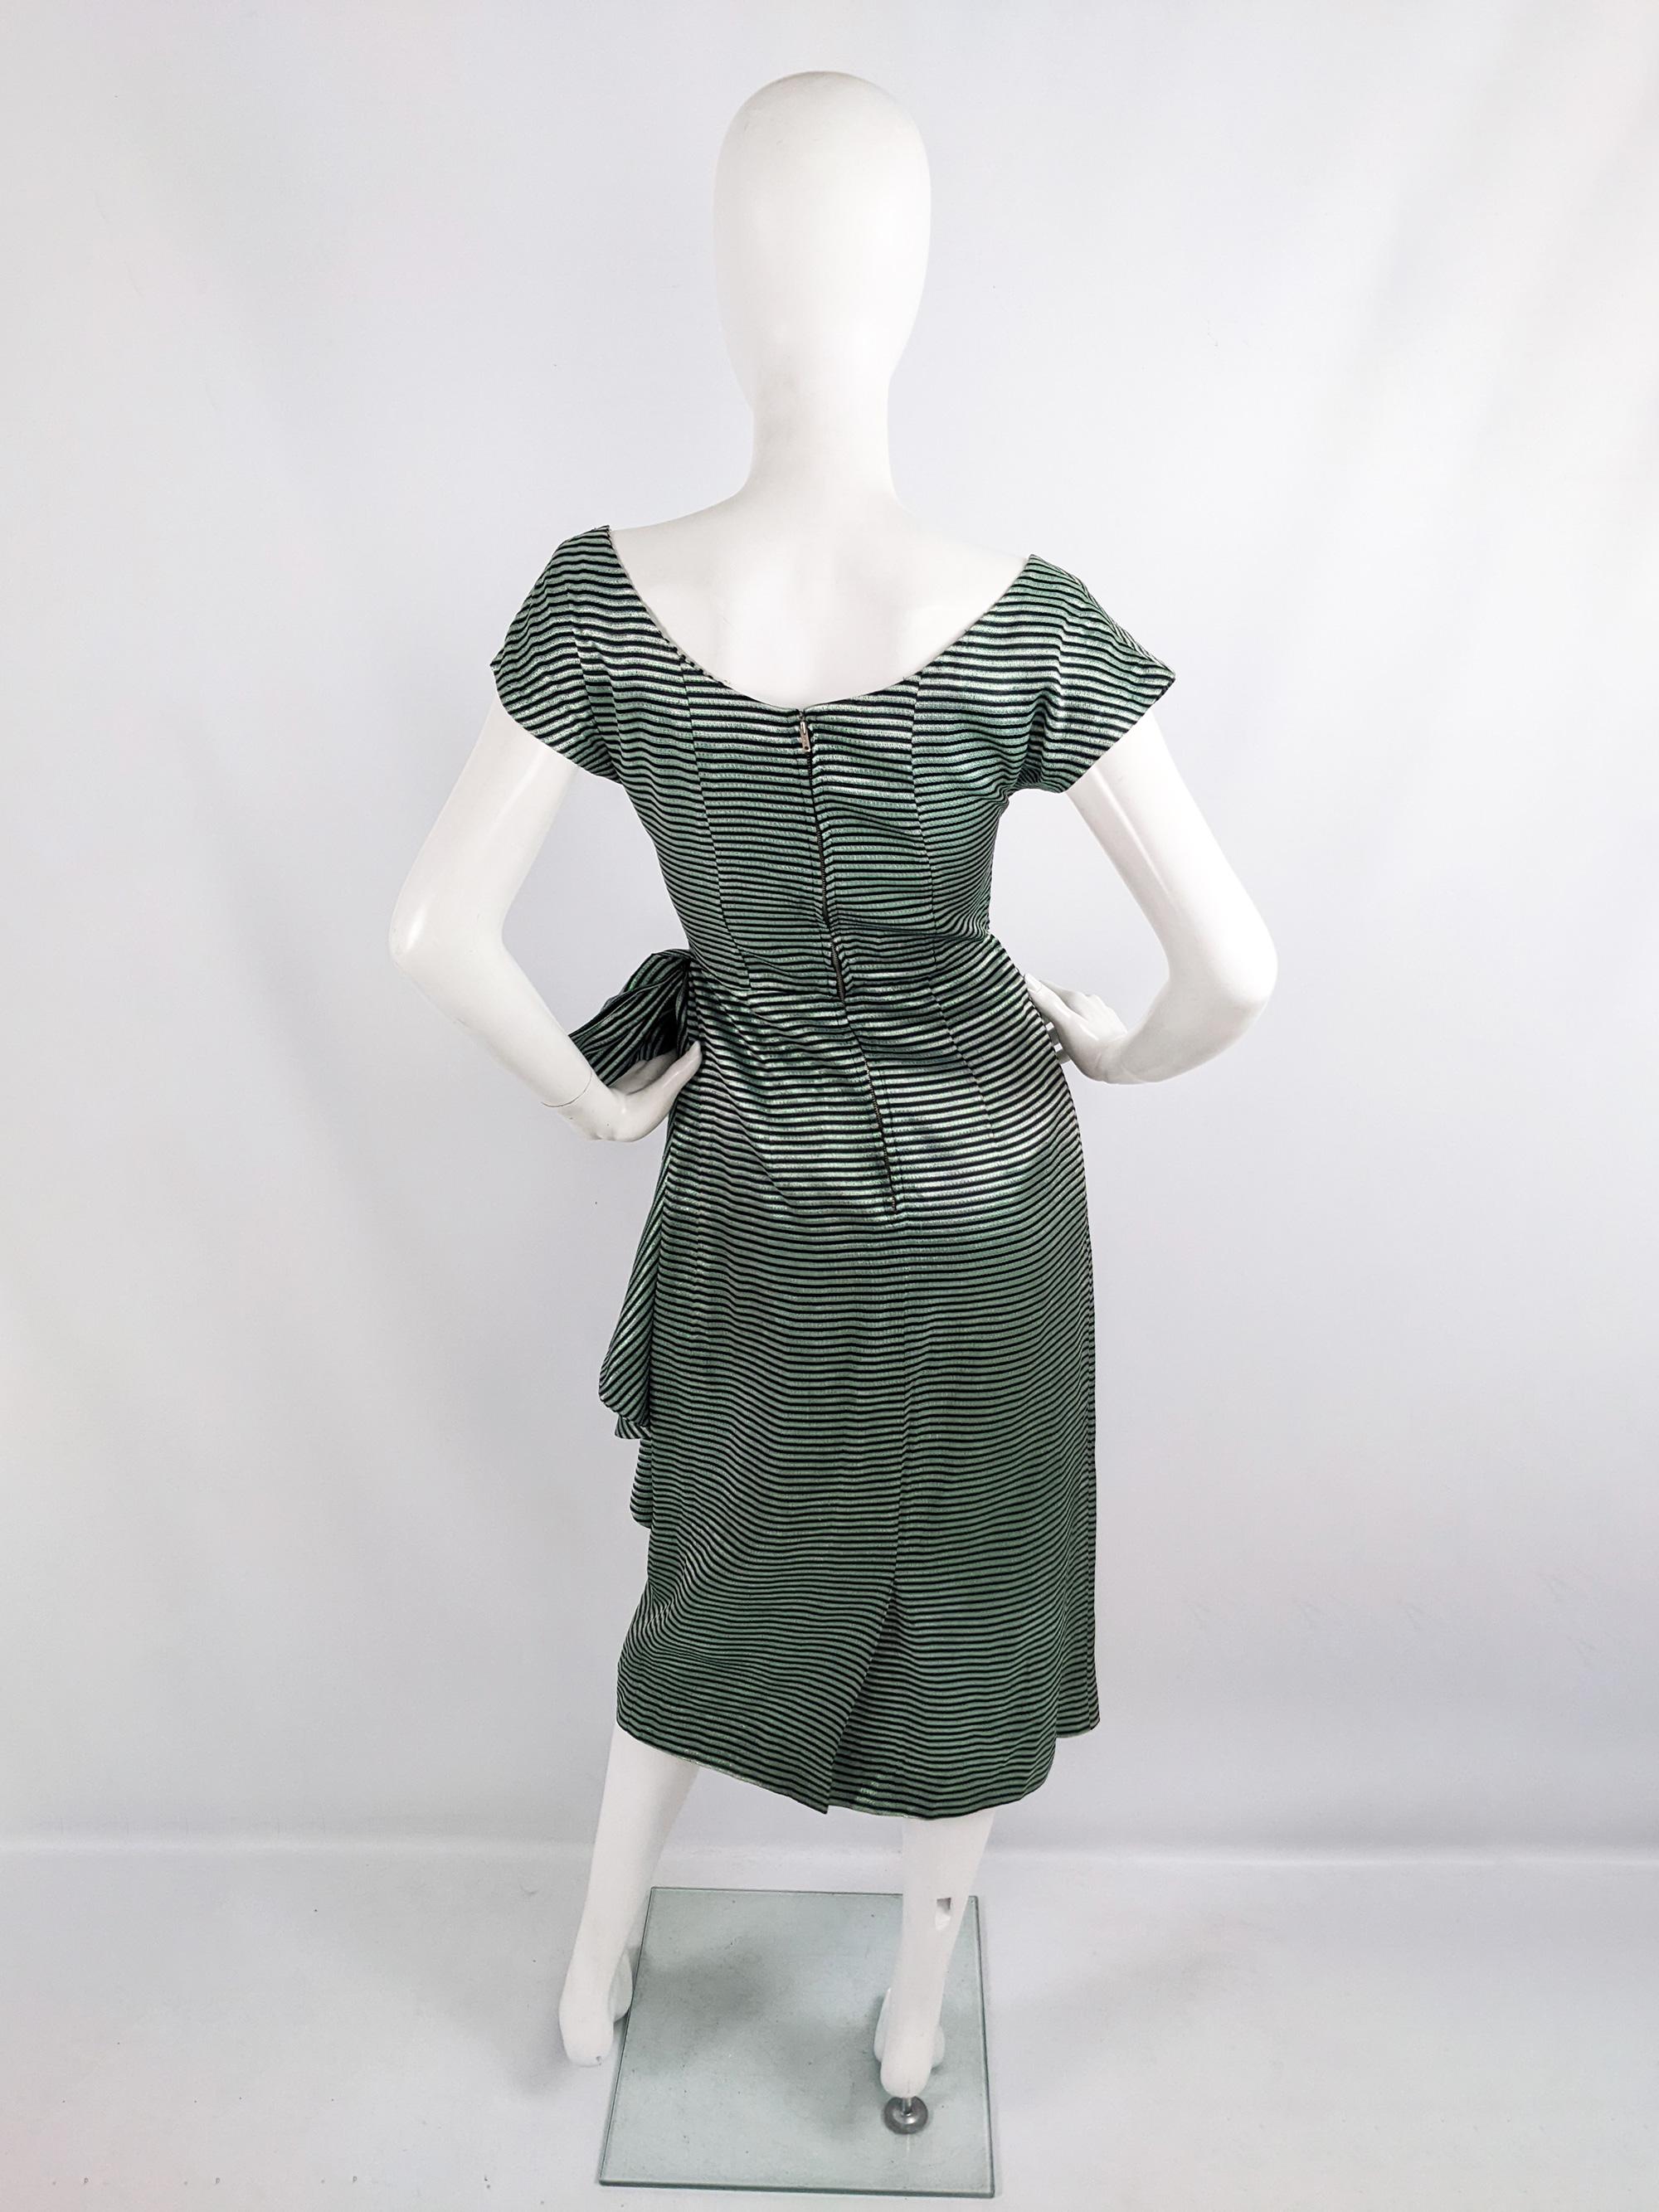 Women's Richard Grossmark Vintage 1950s Metallic Green Lamé Bow 50s Evening Party Dress For Sale